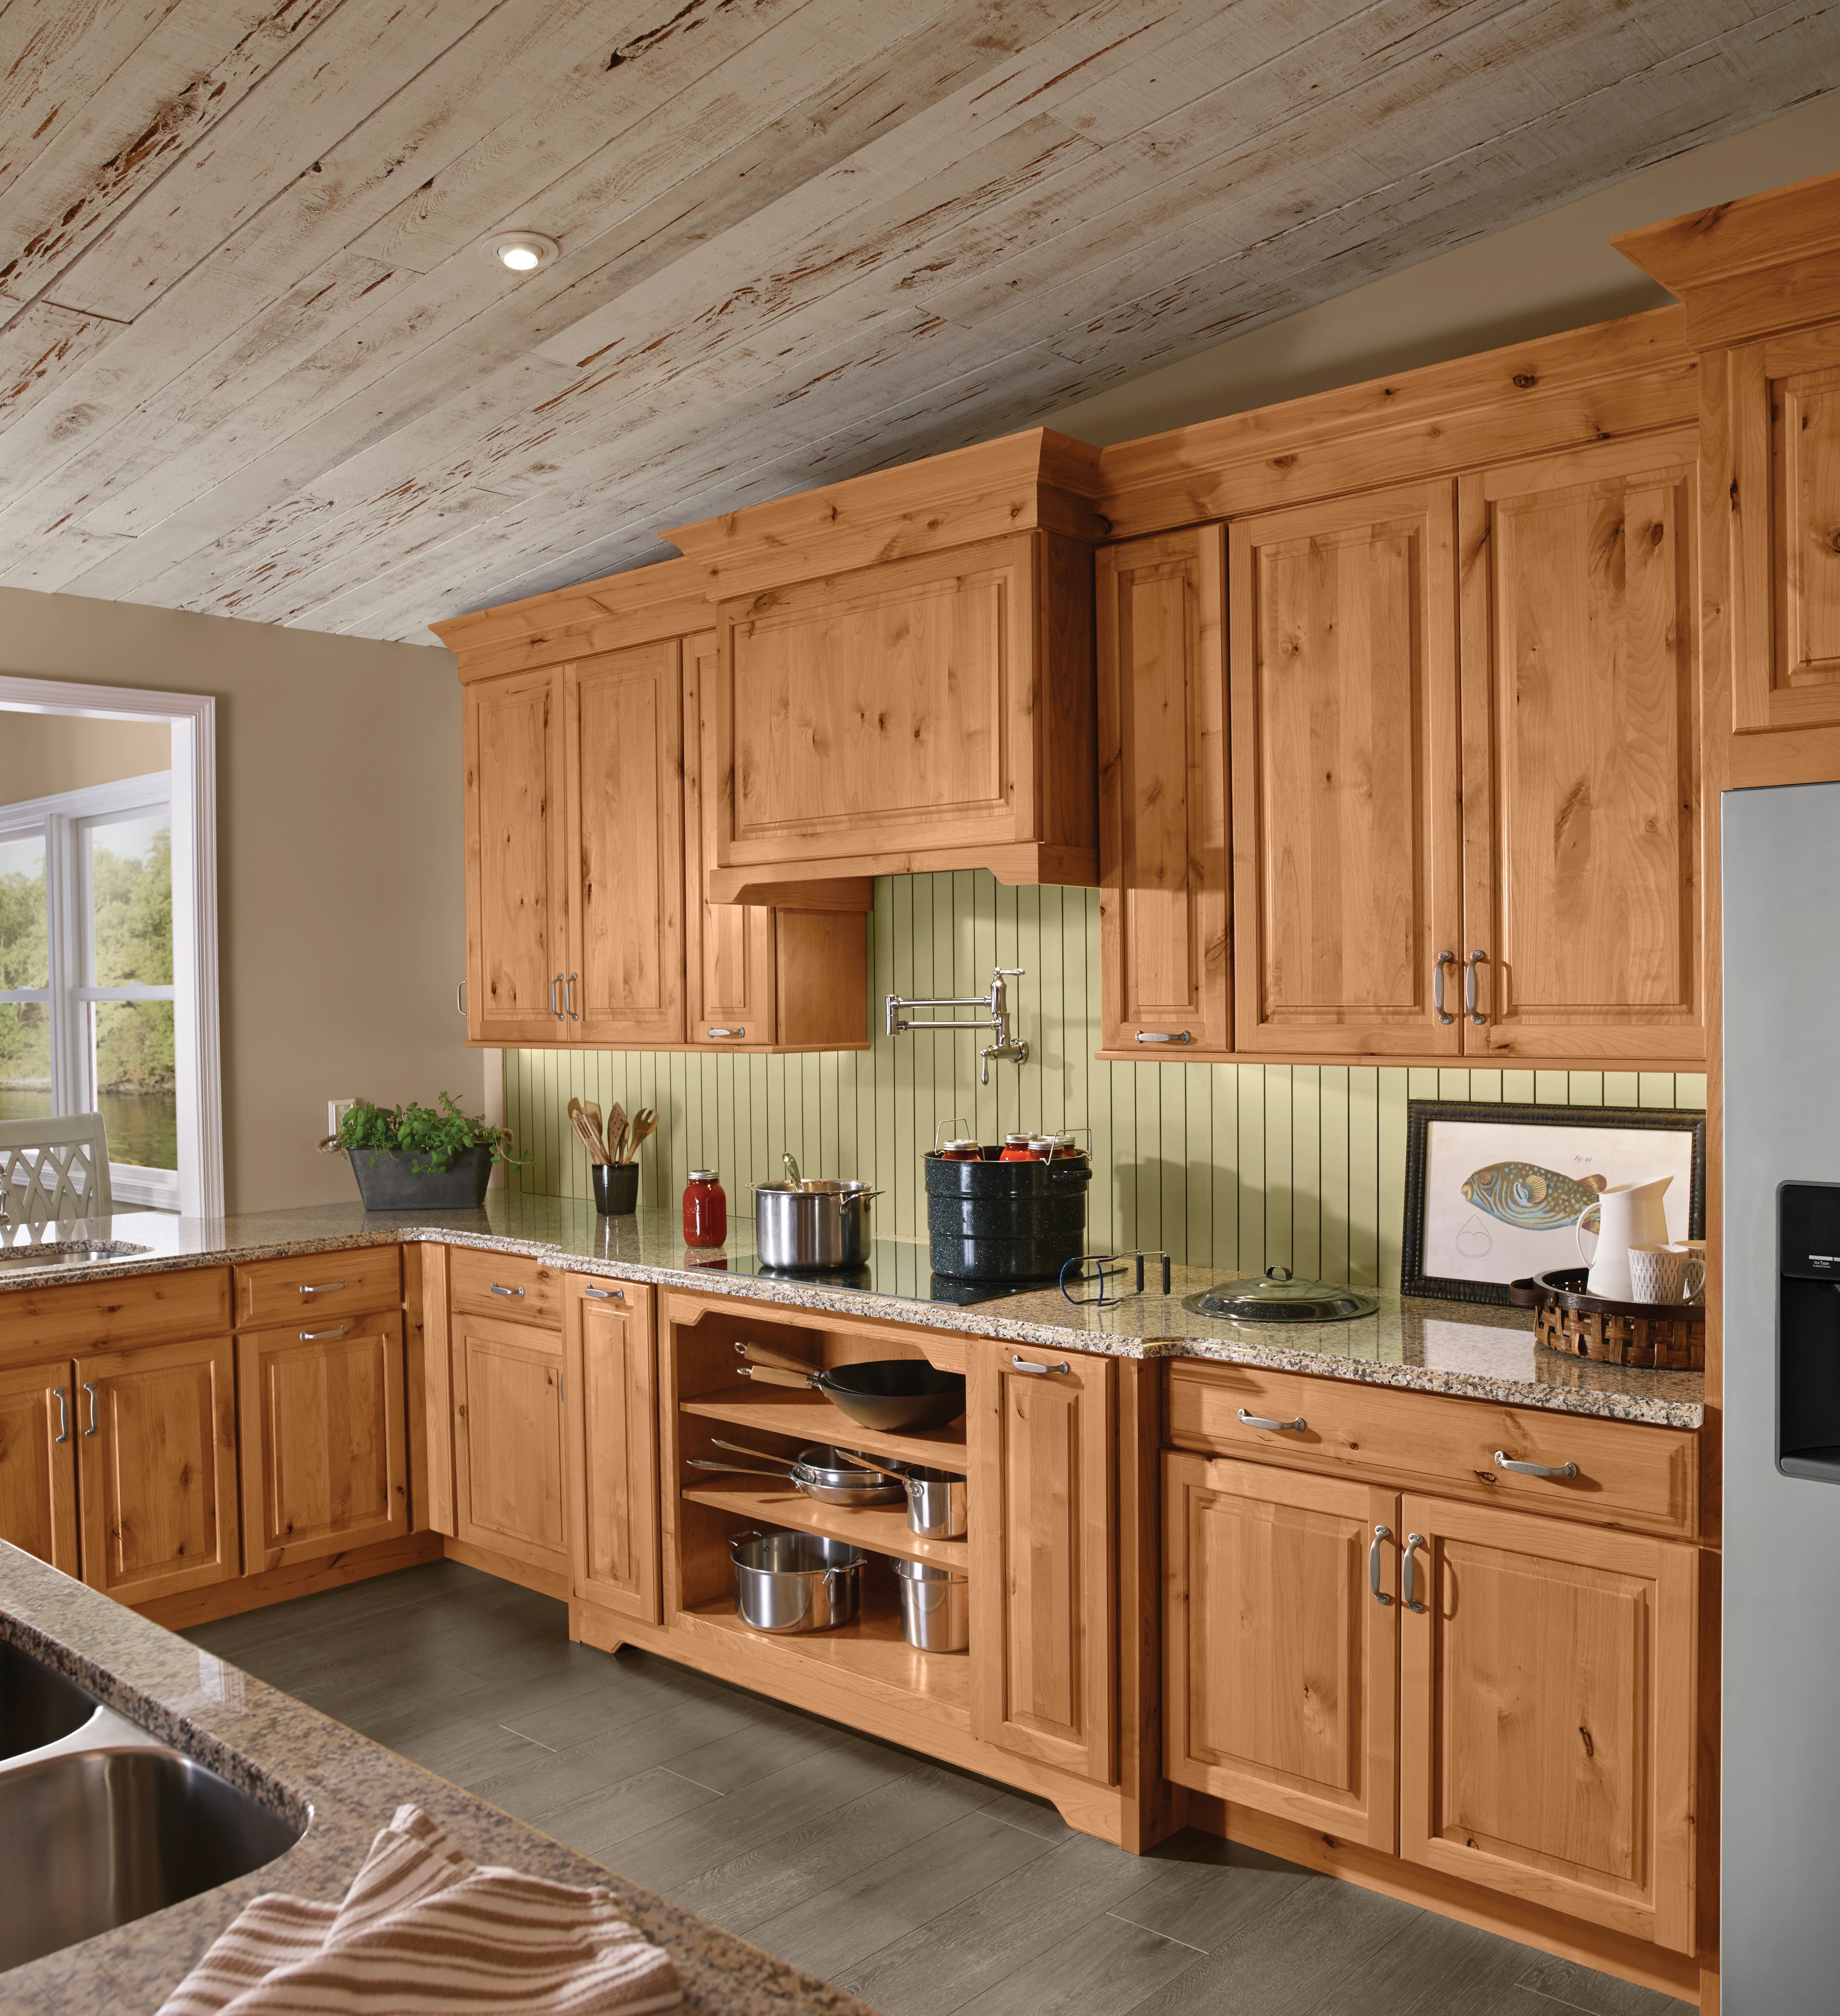 KraftMaid kitchen with Rustic Alder cabinets